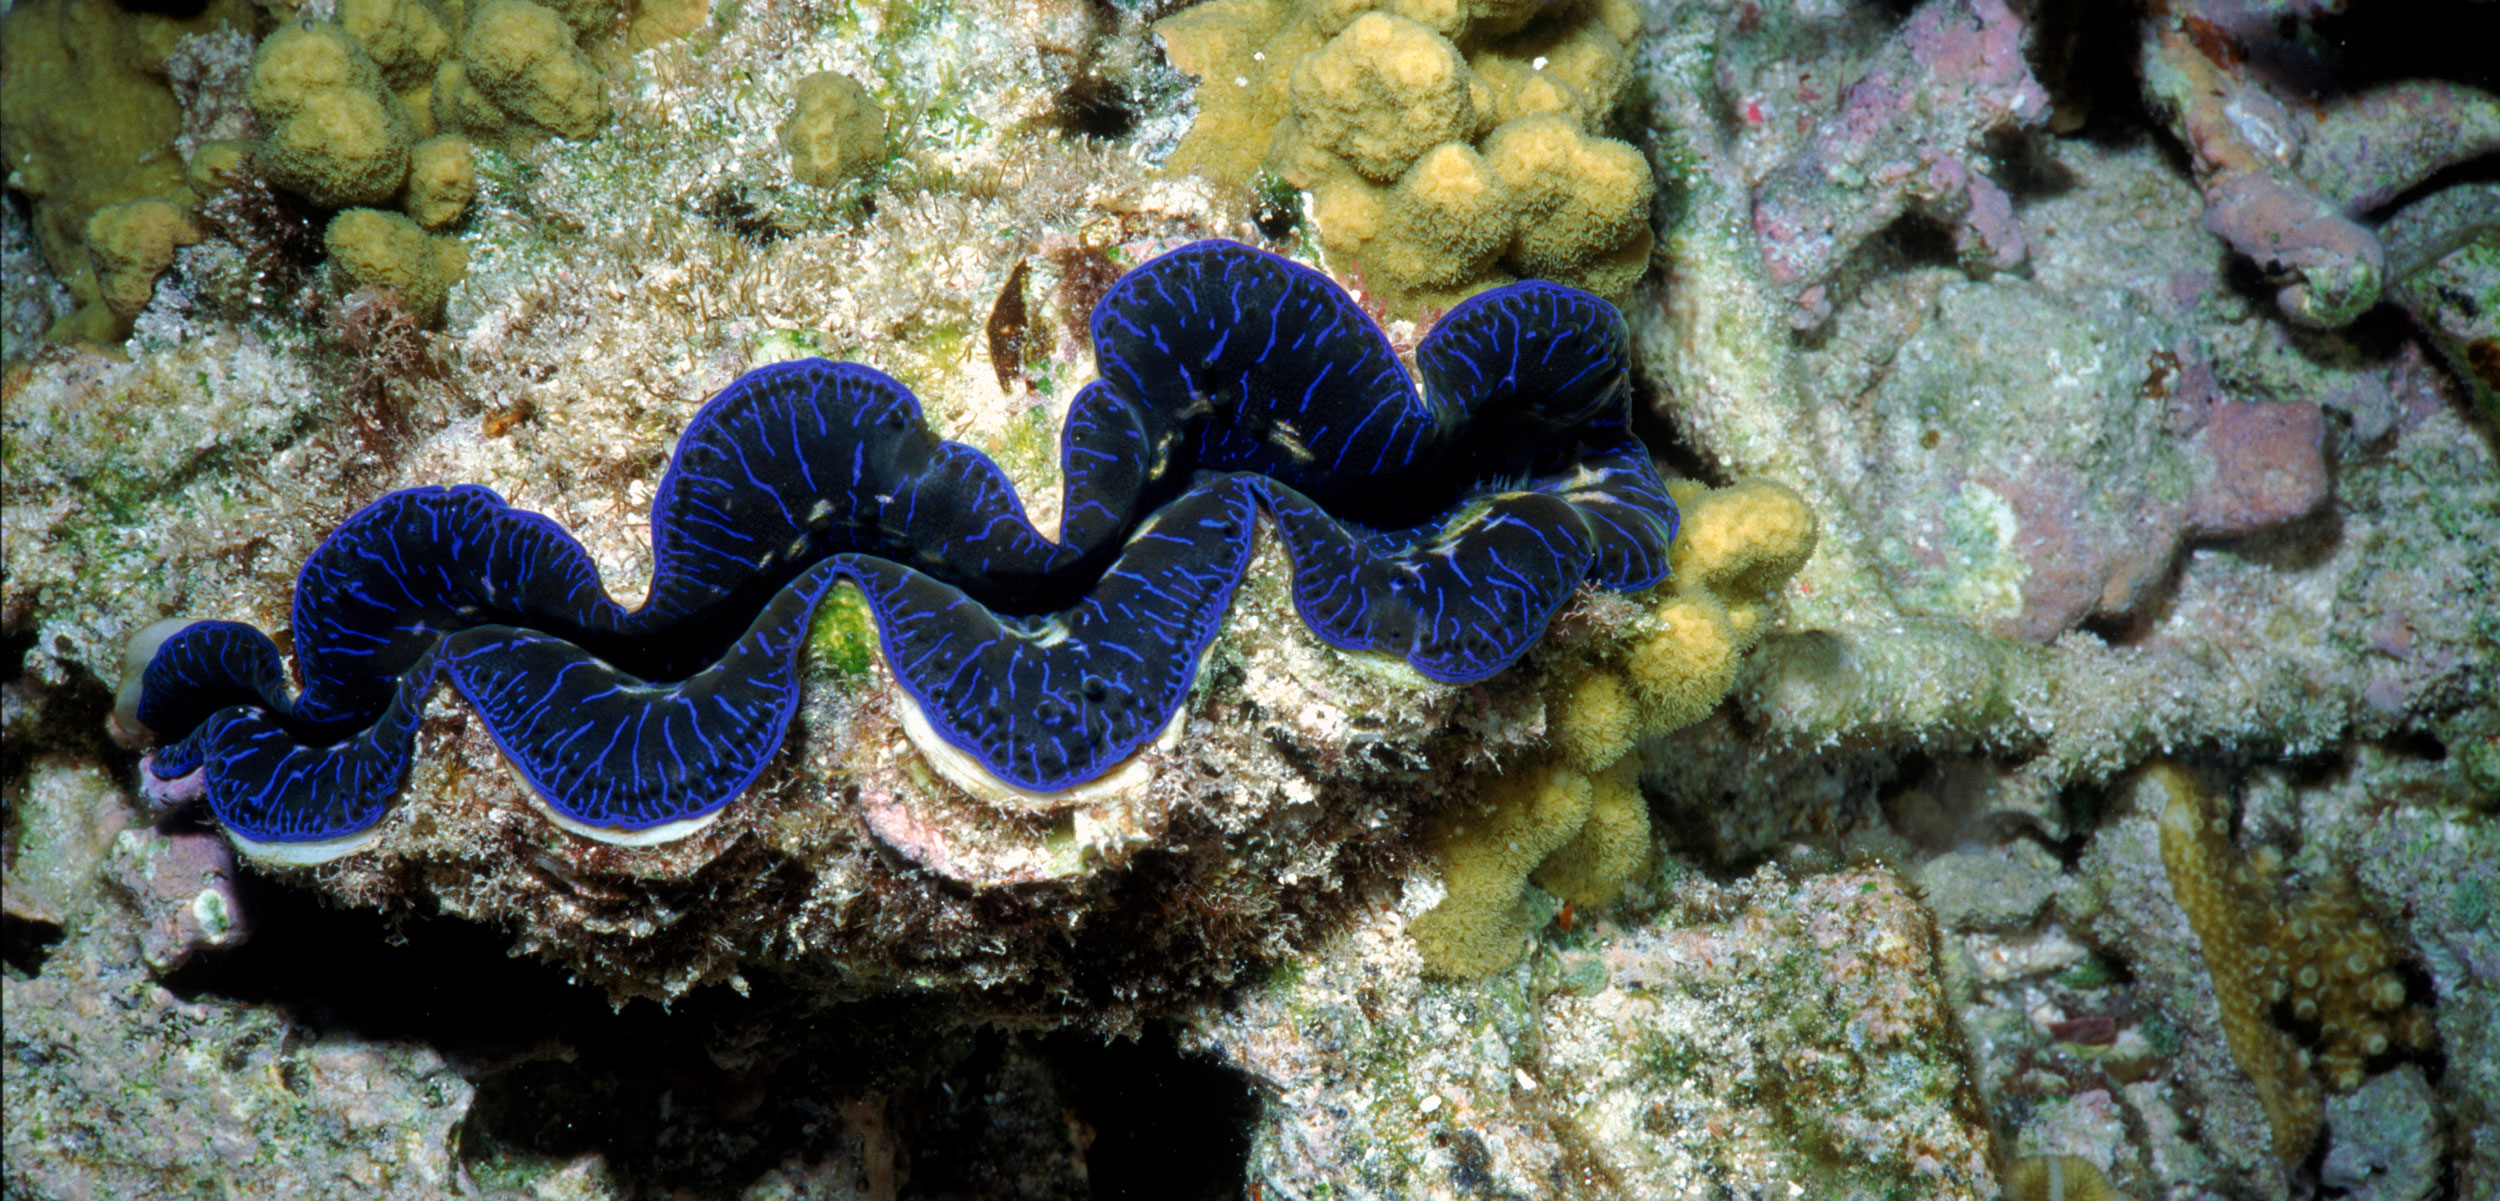 Giant clam terraria